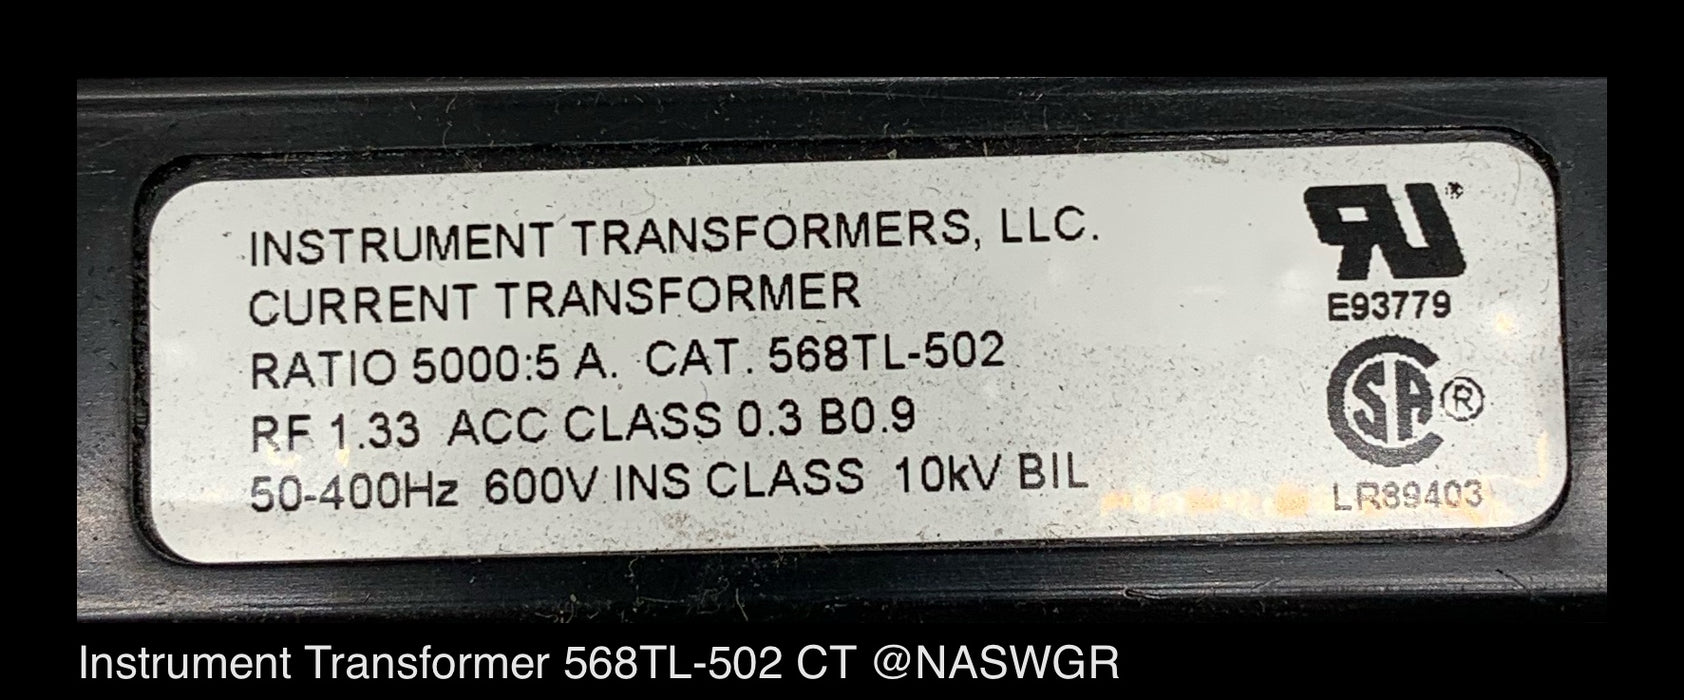 Instrument Transformer 568TL-502 Current Transformer ~ 5000:5